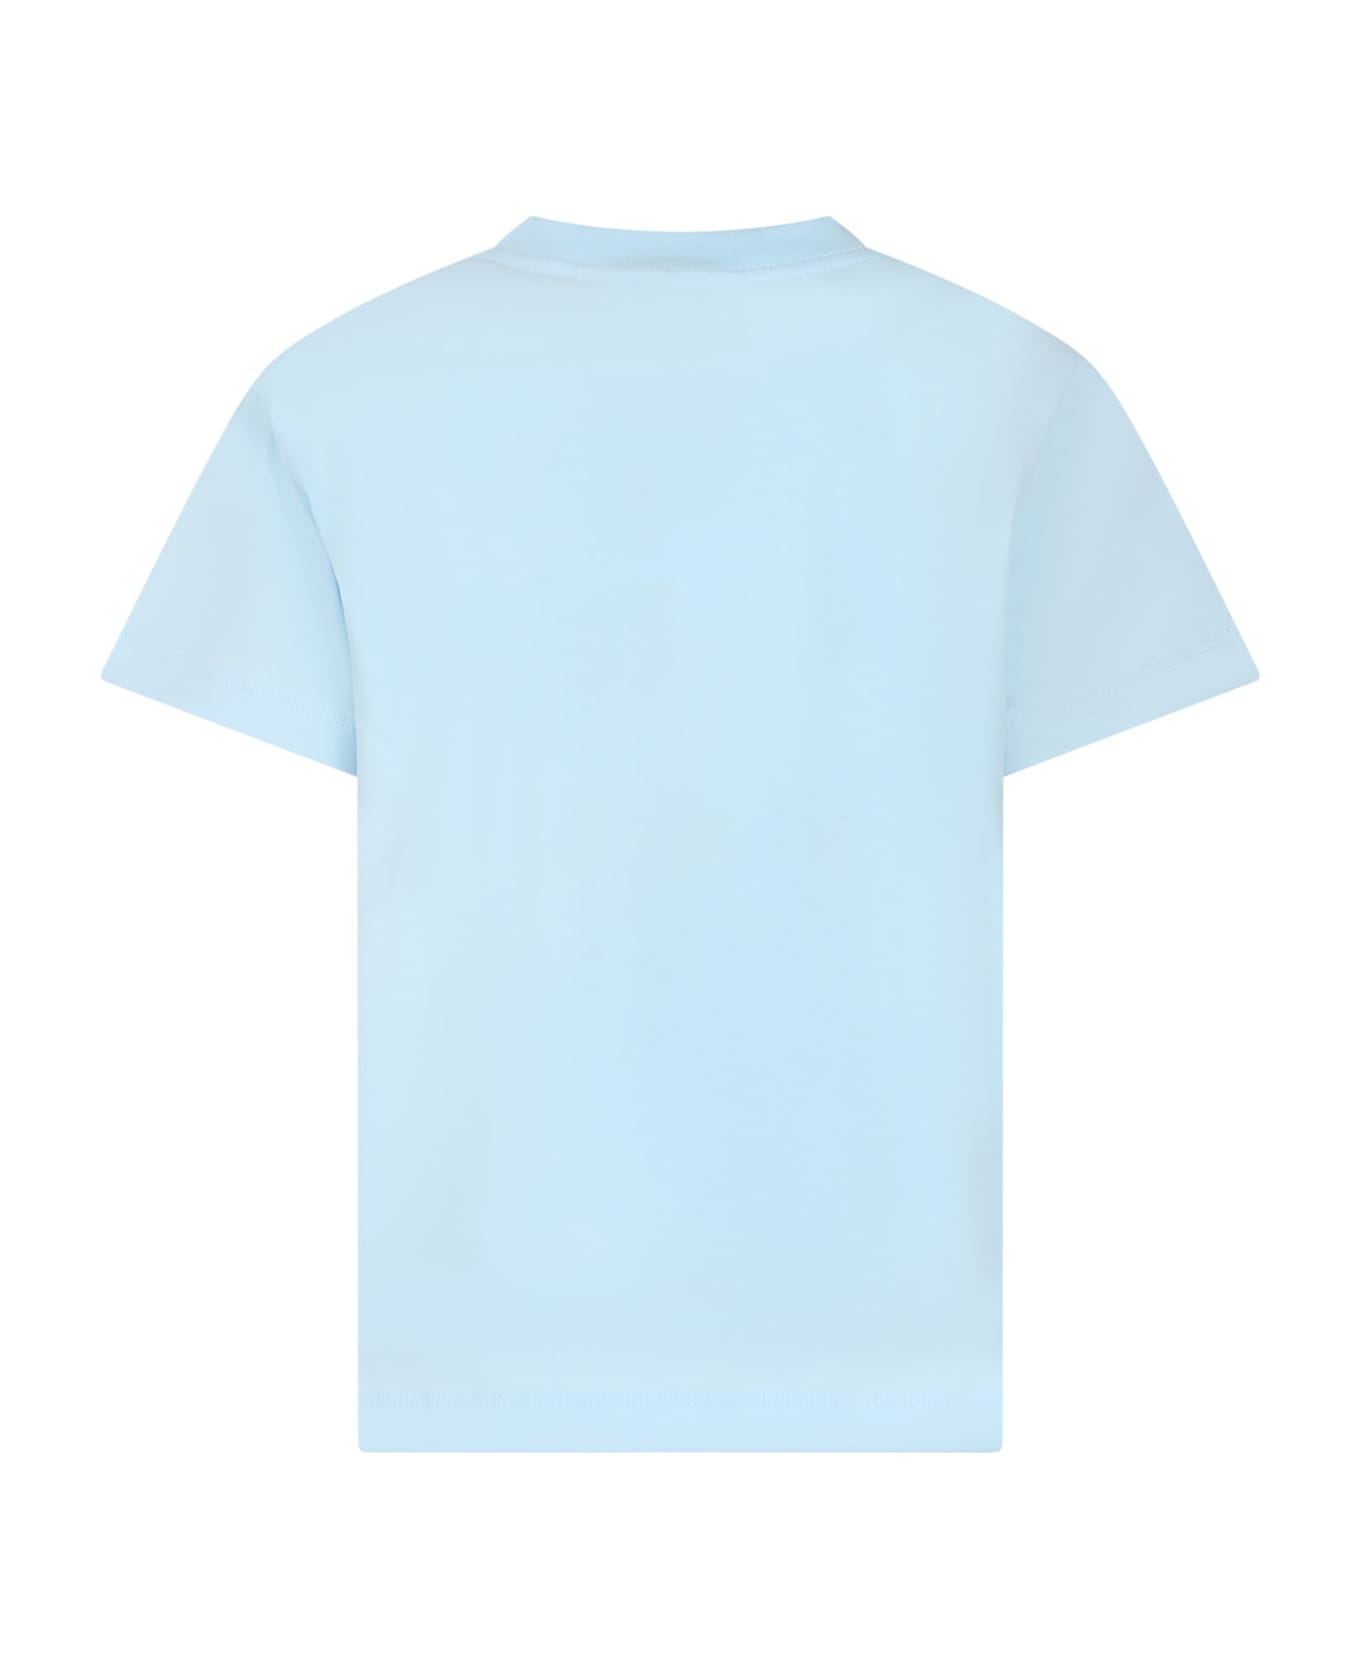 Molo Light Blue T-shirt For Boy With Dinosaur Print - Light Blue